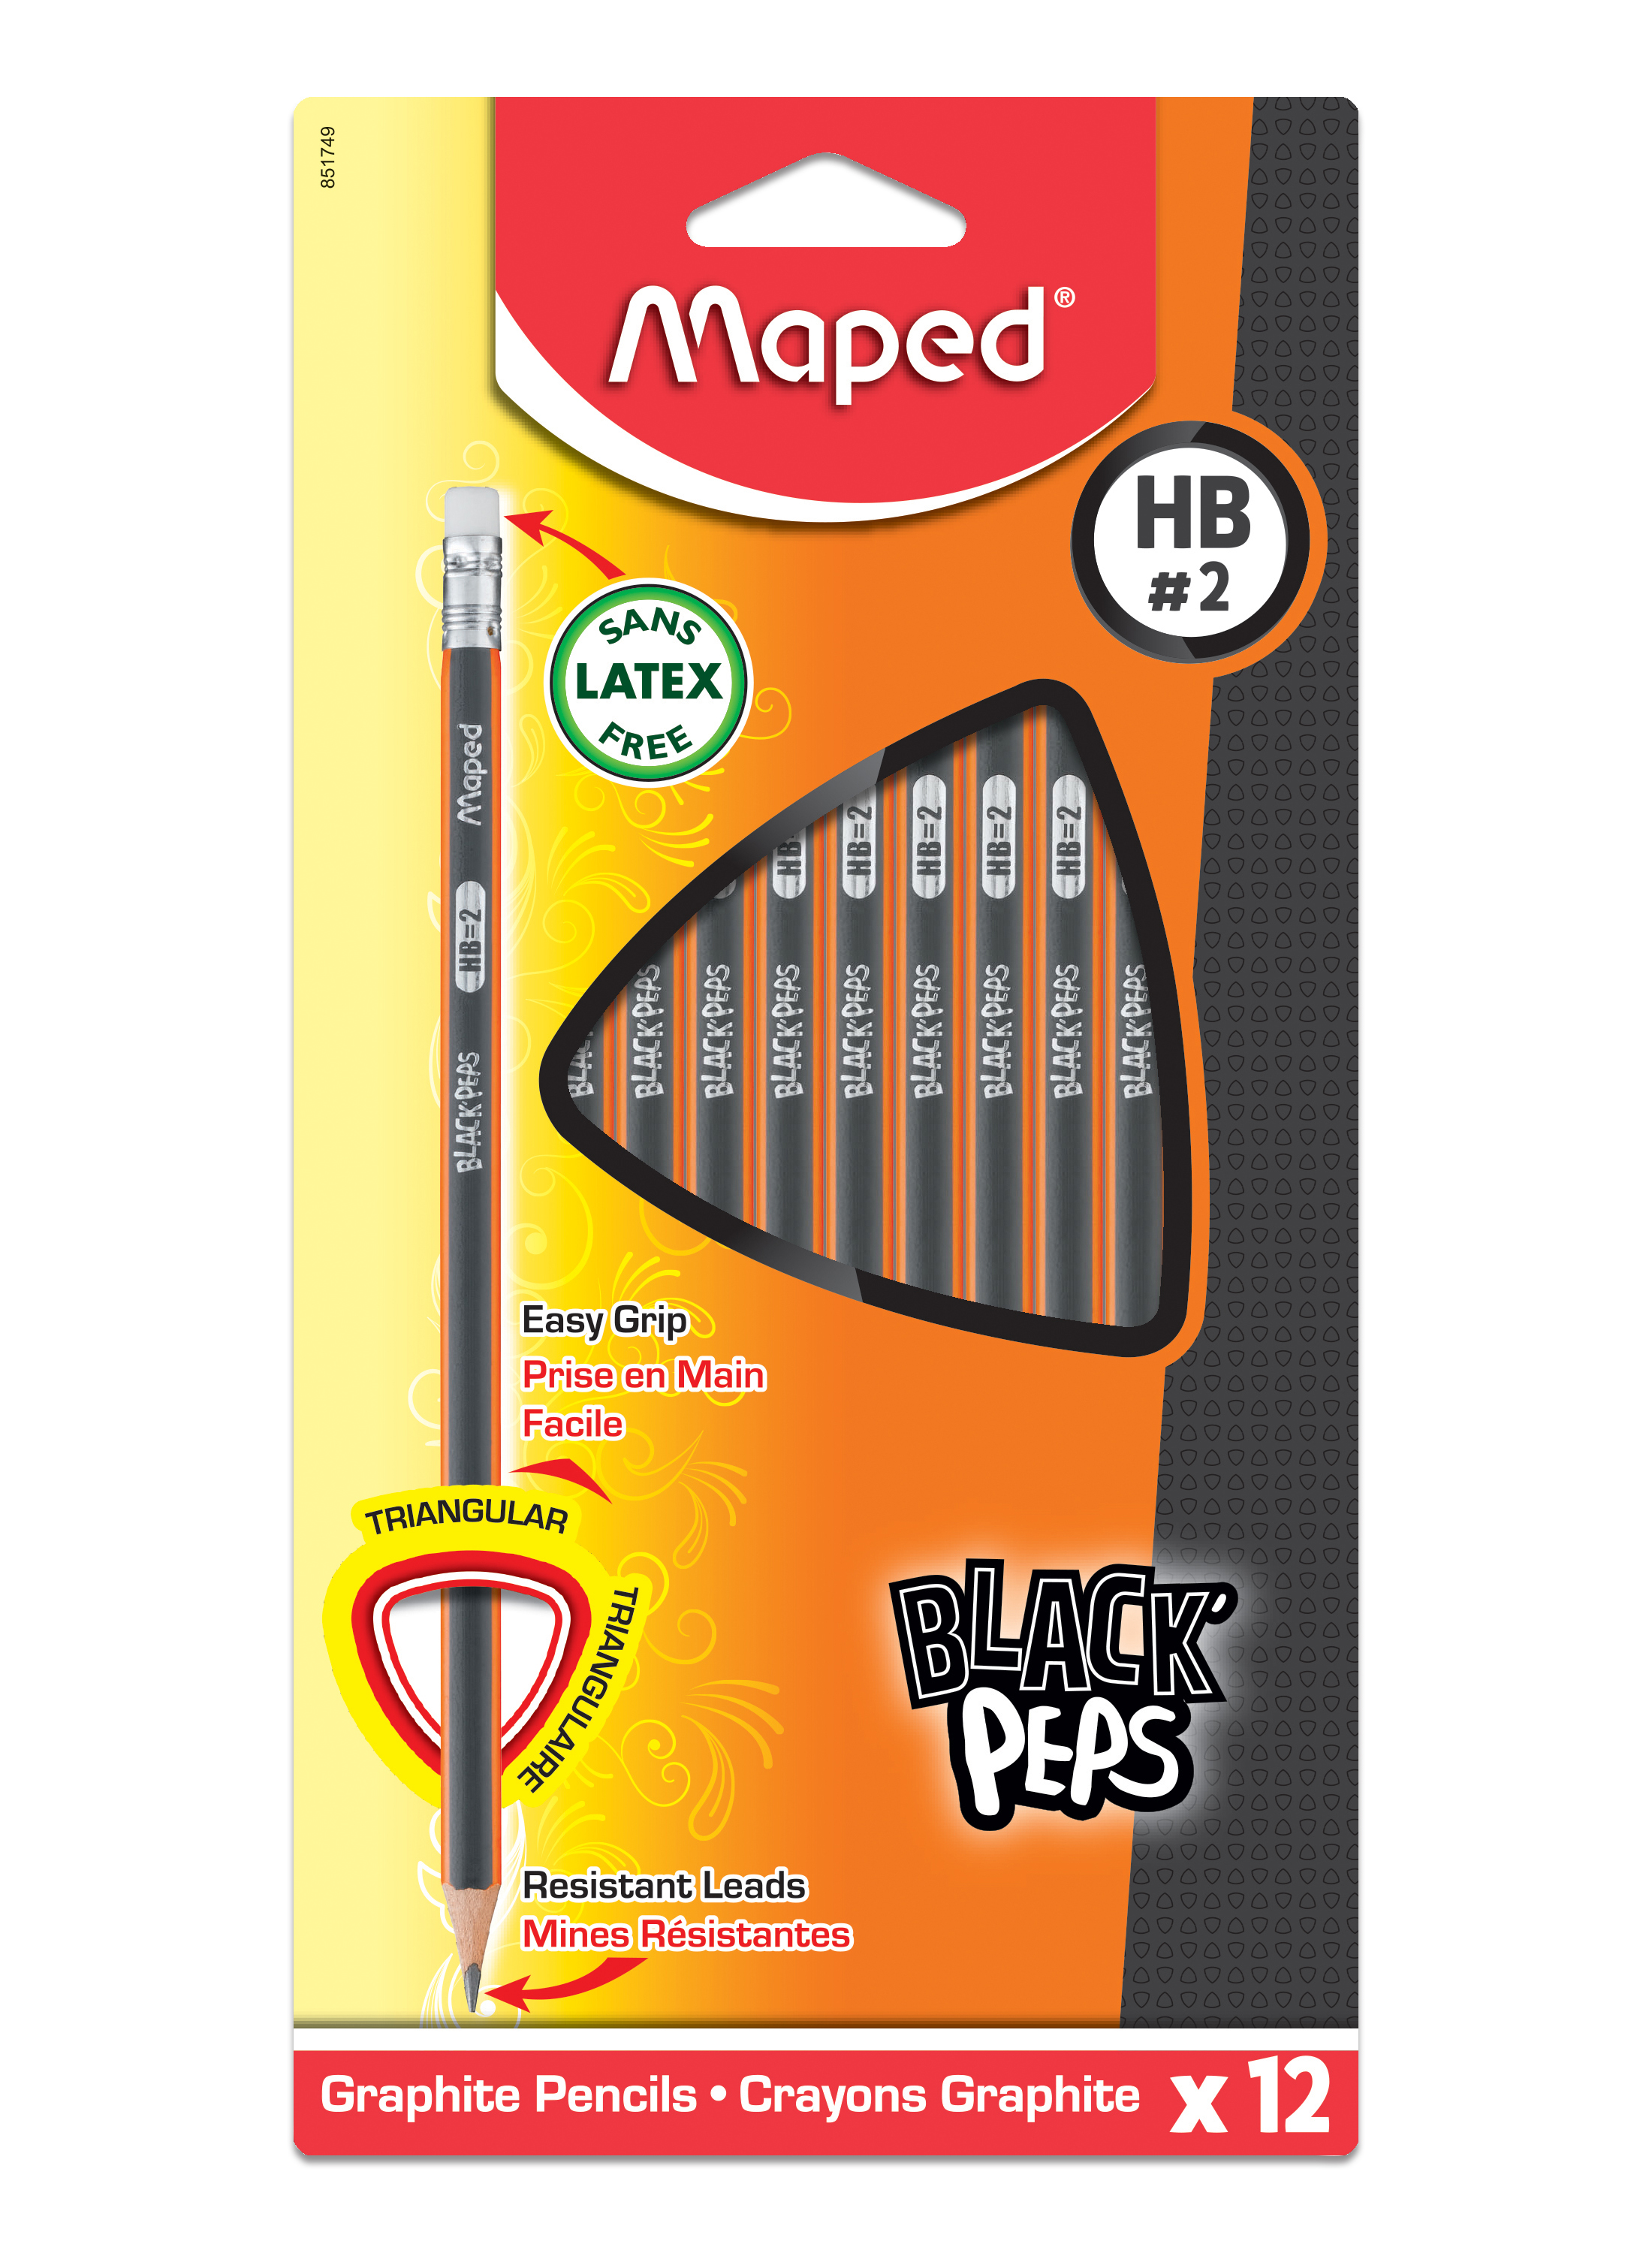 Maped Black' Peps Triangular Graphite Pencils, 12 Pieces - image 1 of 3